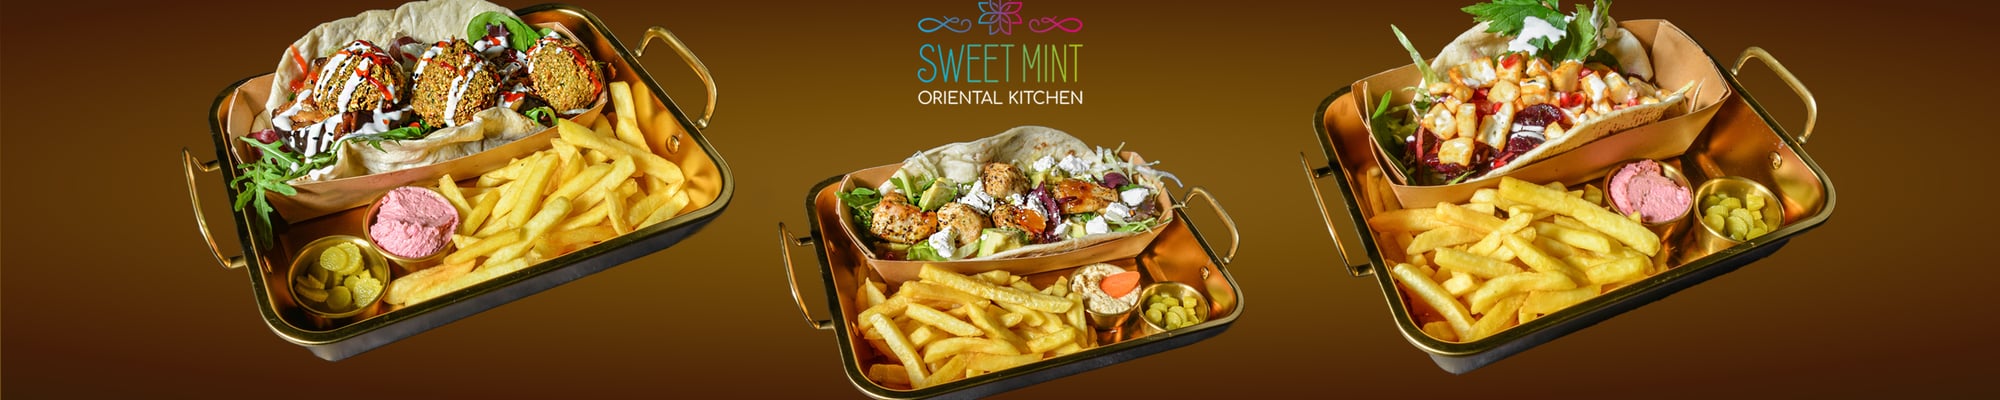 Sweet Mint - Oriental Kitchen